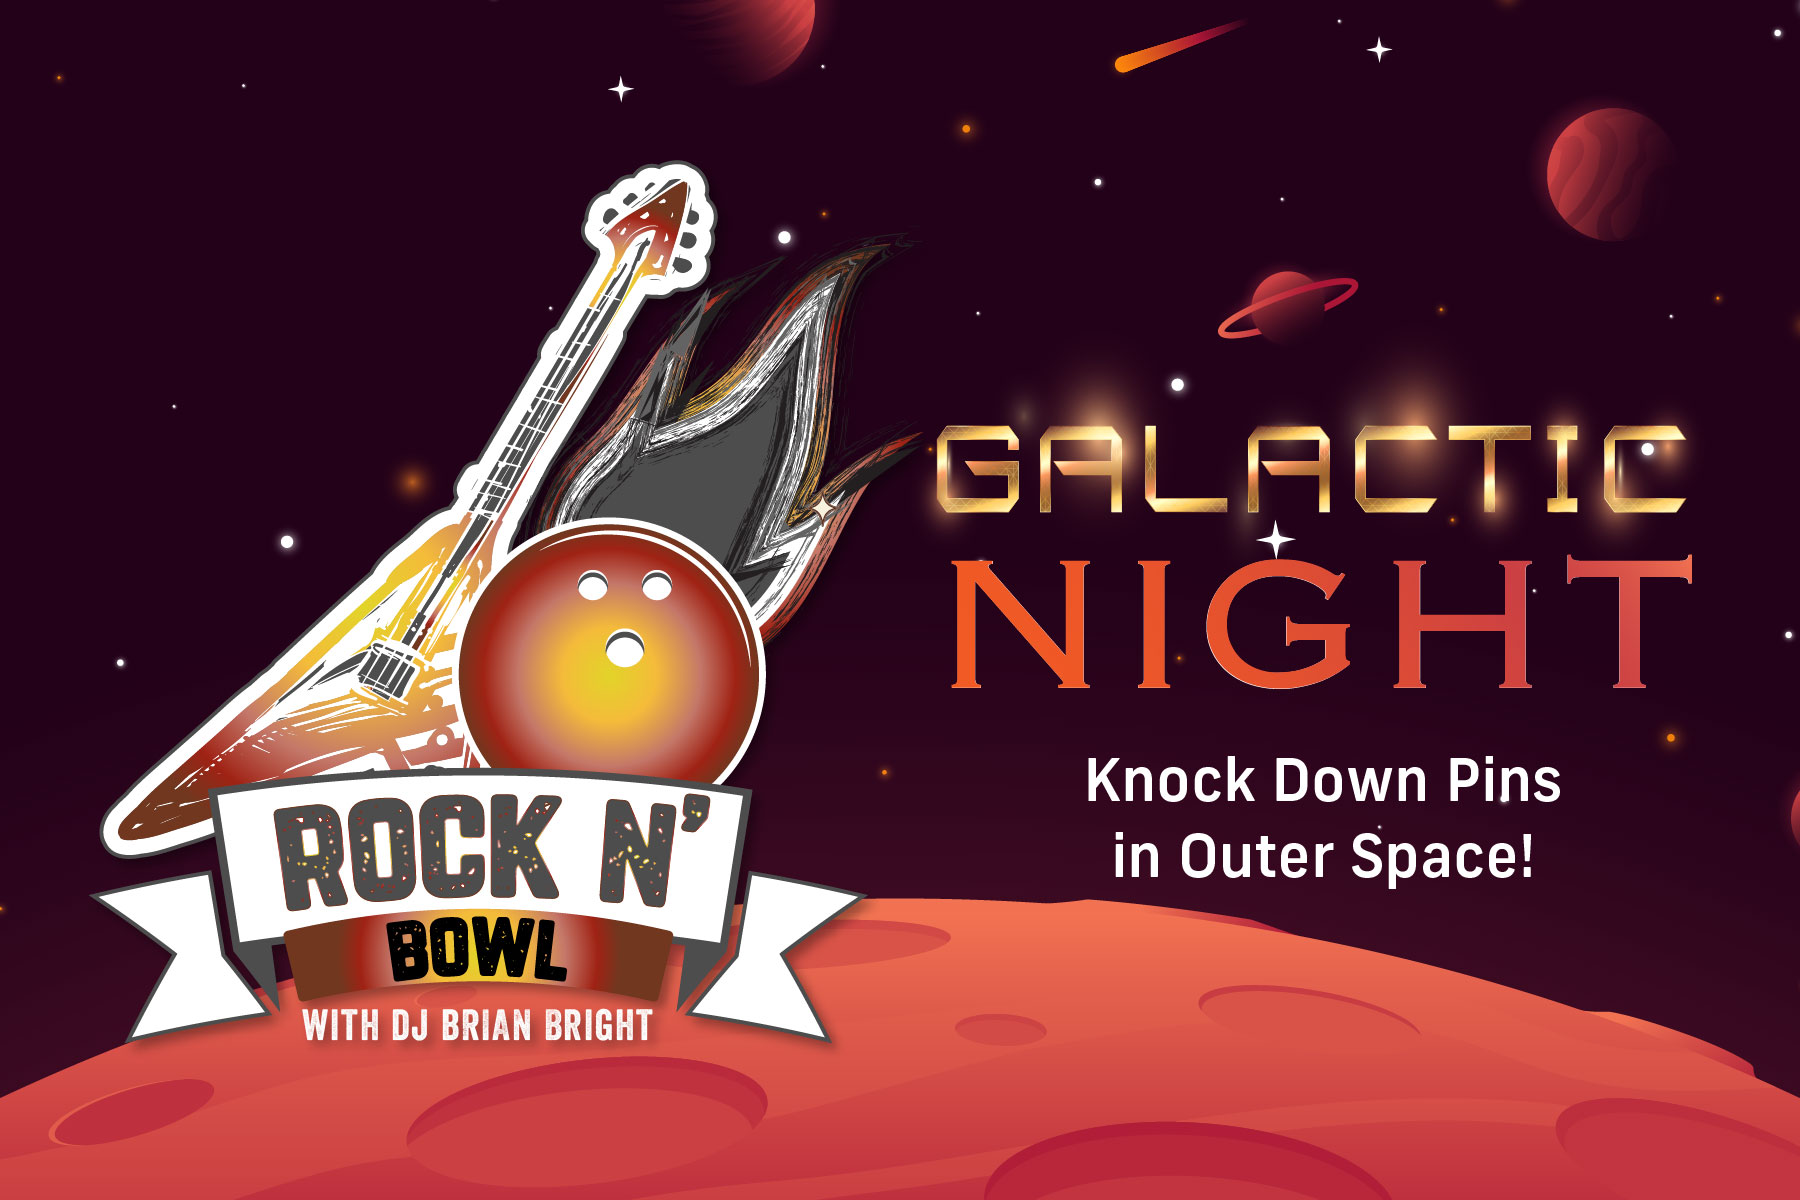 Rock N Bowl Galactic Night